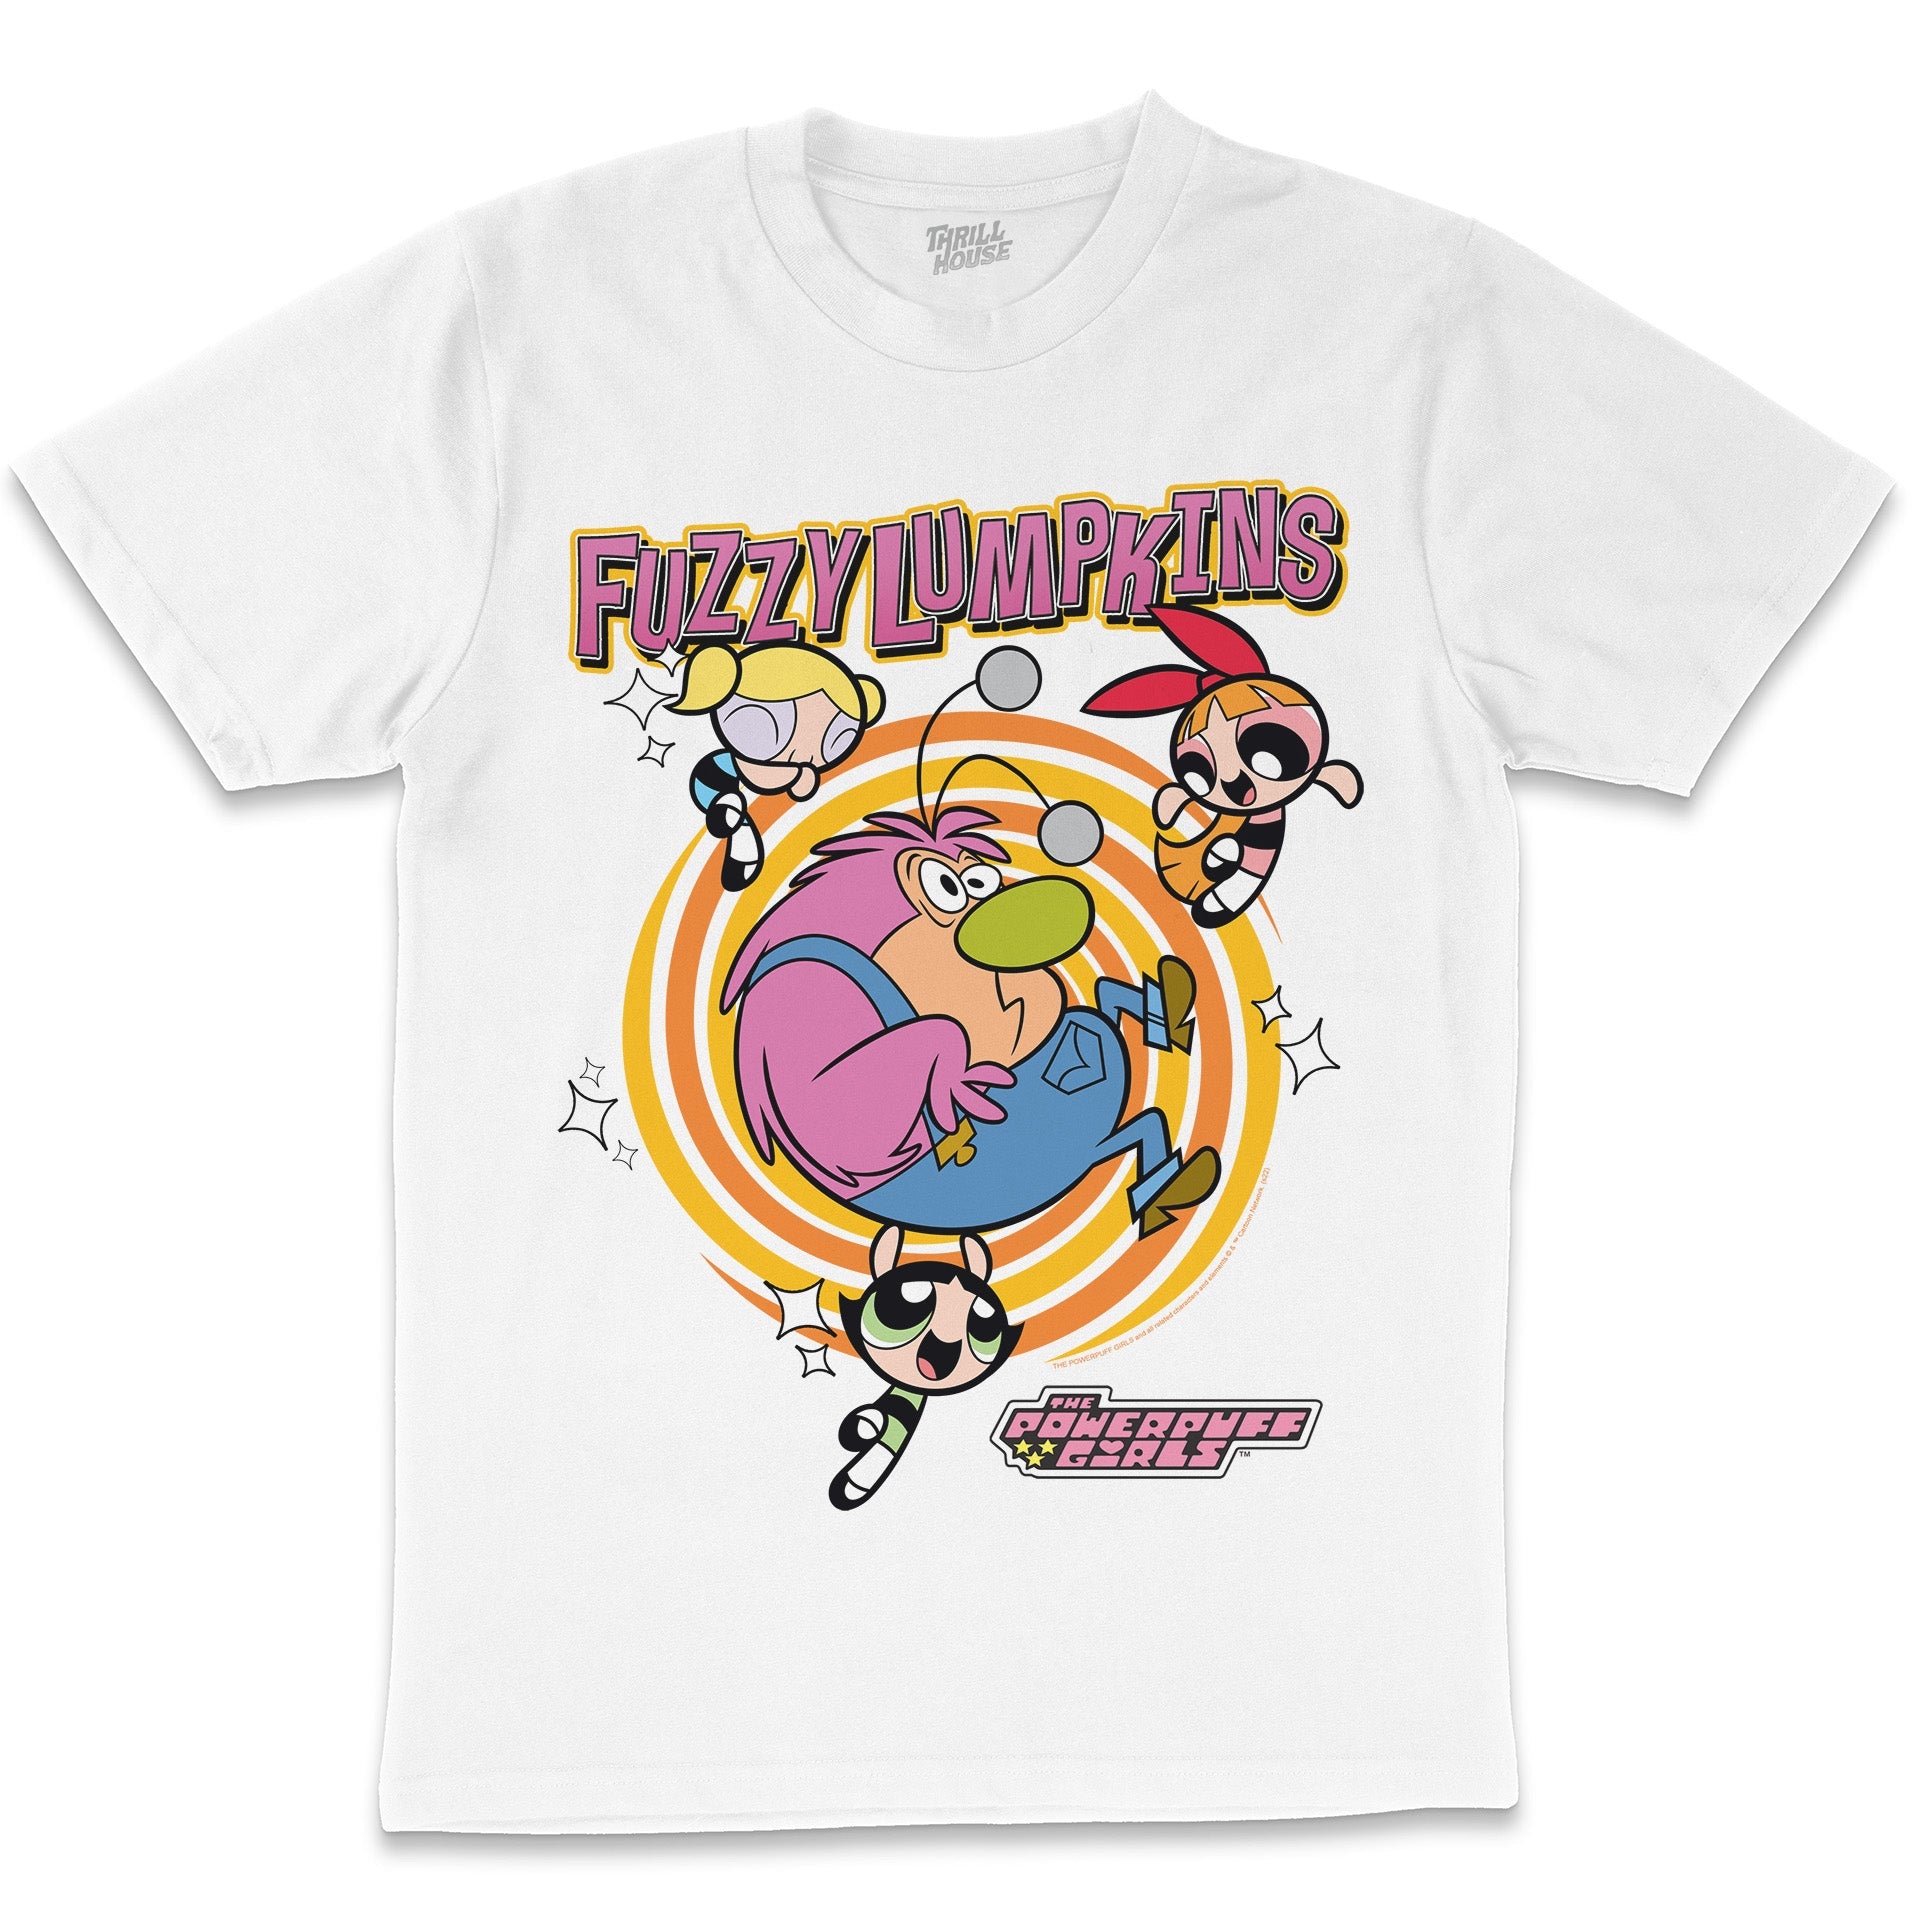 Powerpuff Girls Fuzzy Lumpkins 90s Superhero Cartoon Animation Series Officially Licensed Cotton T-Shirt